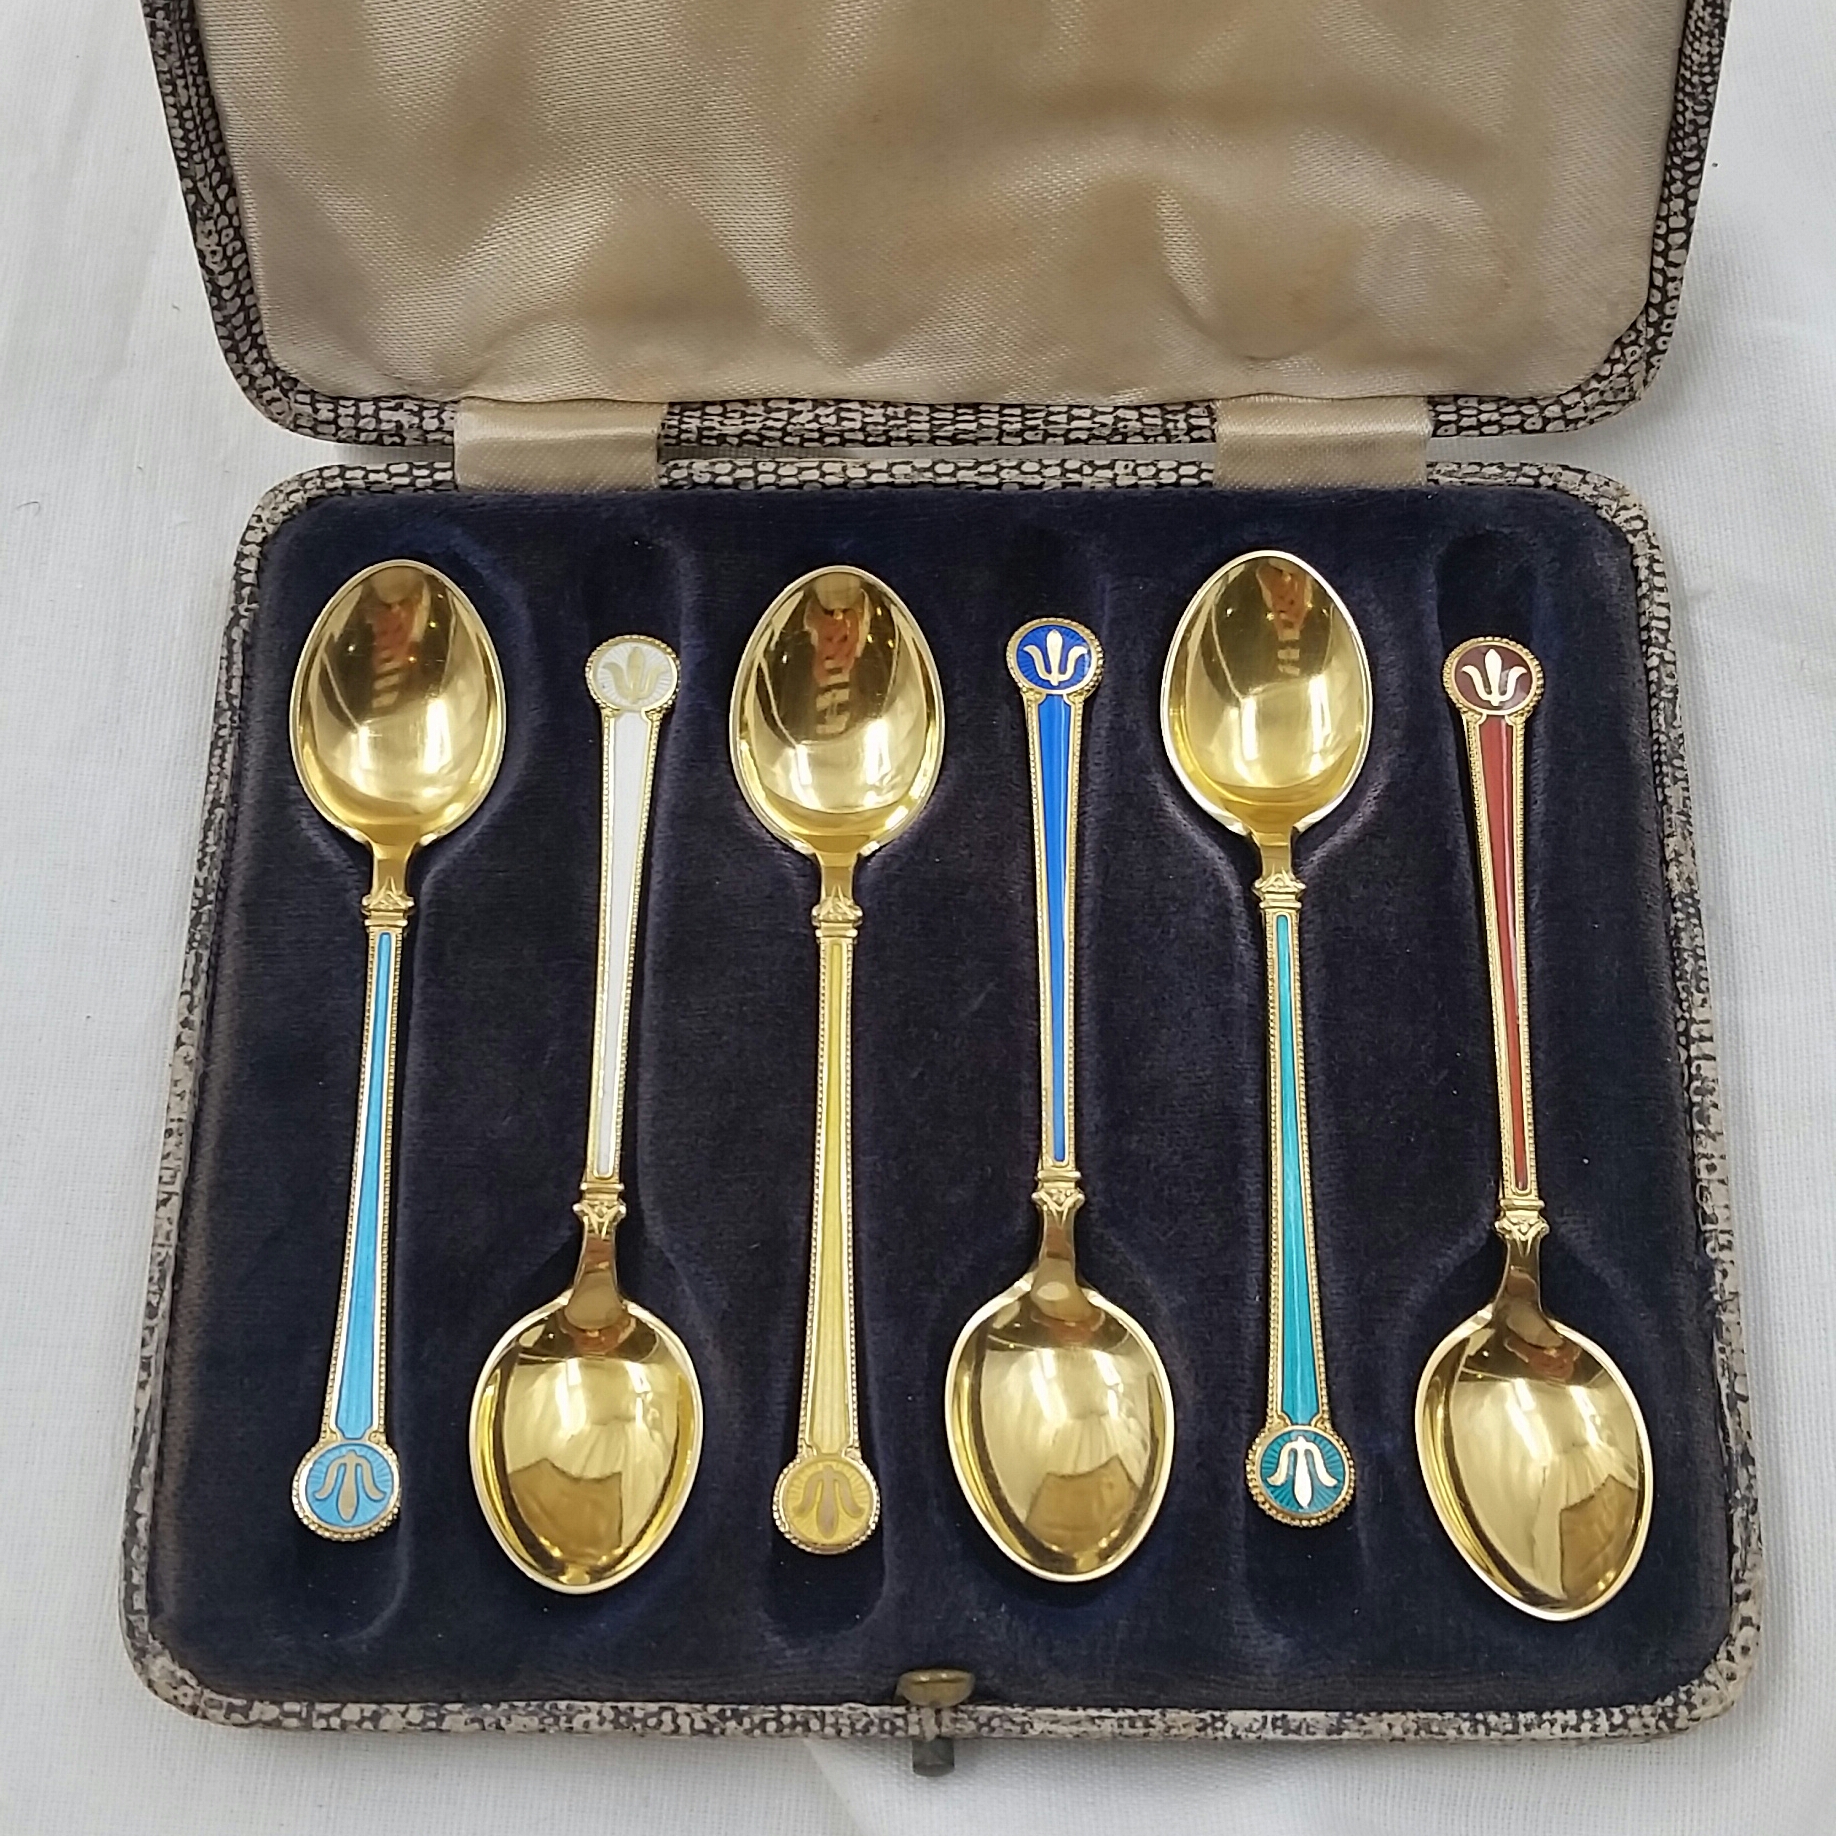 Gold Demitassee Spoon Set